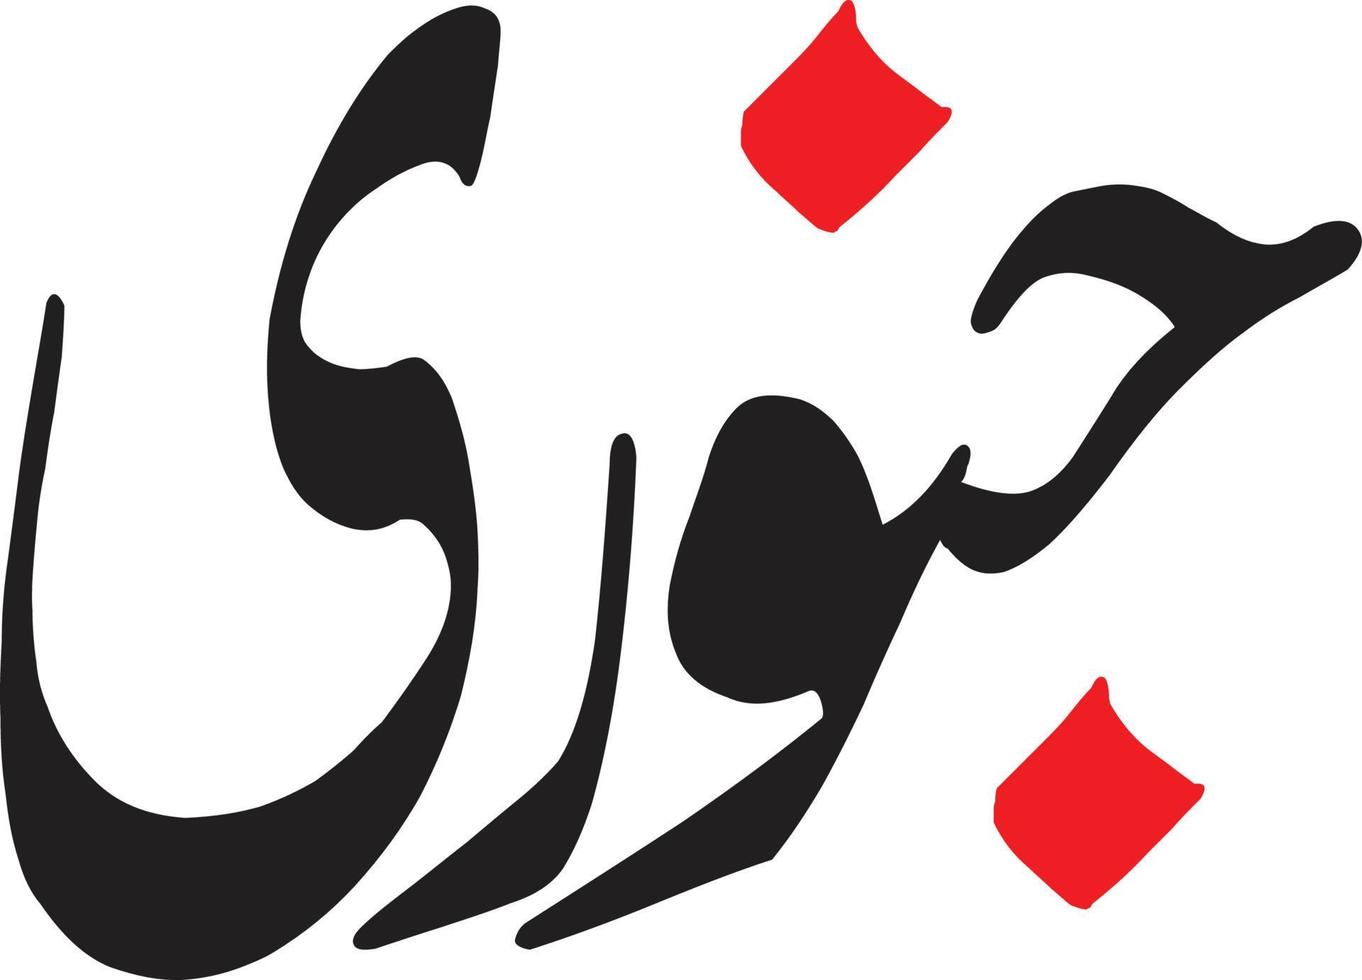 vector libre de caligrafía árabe islámica junwery